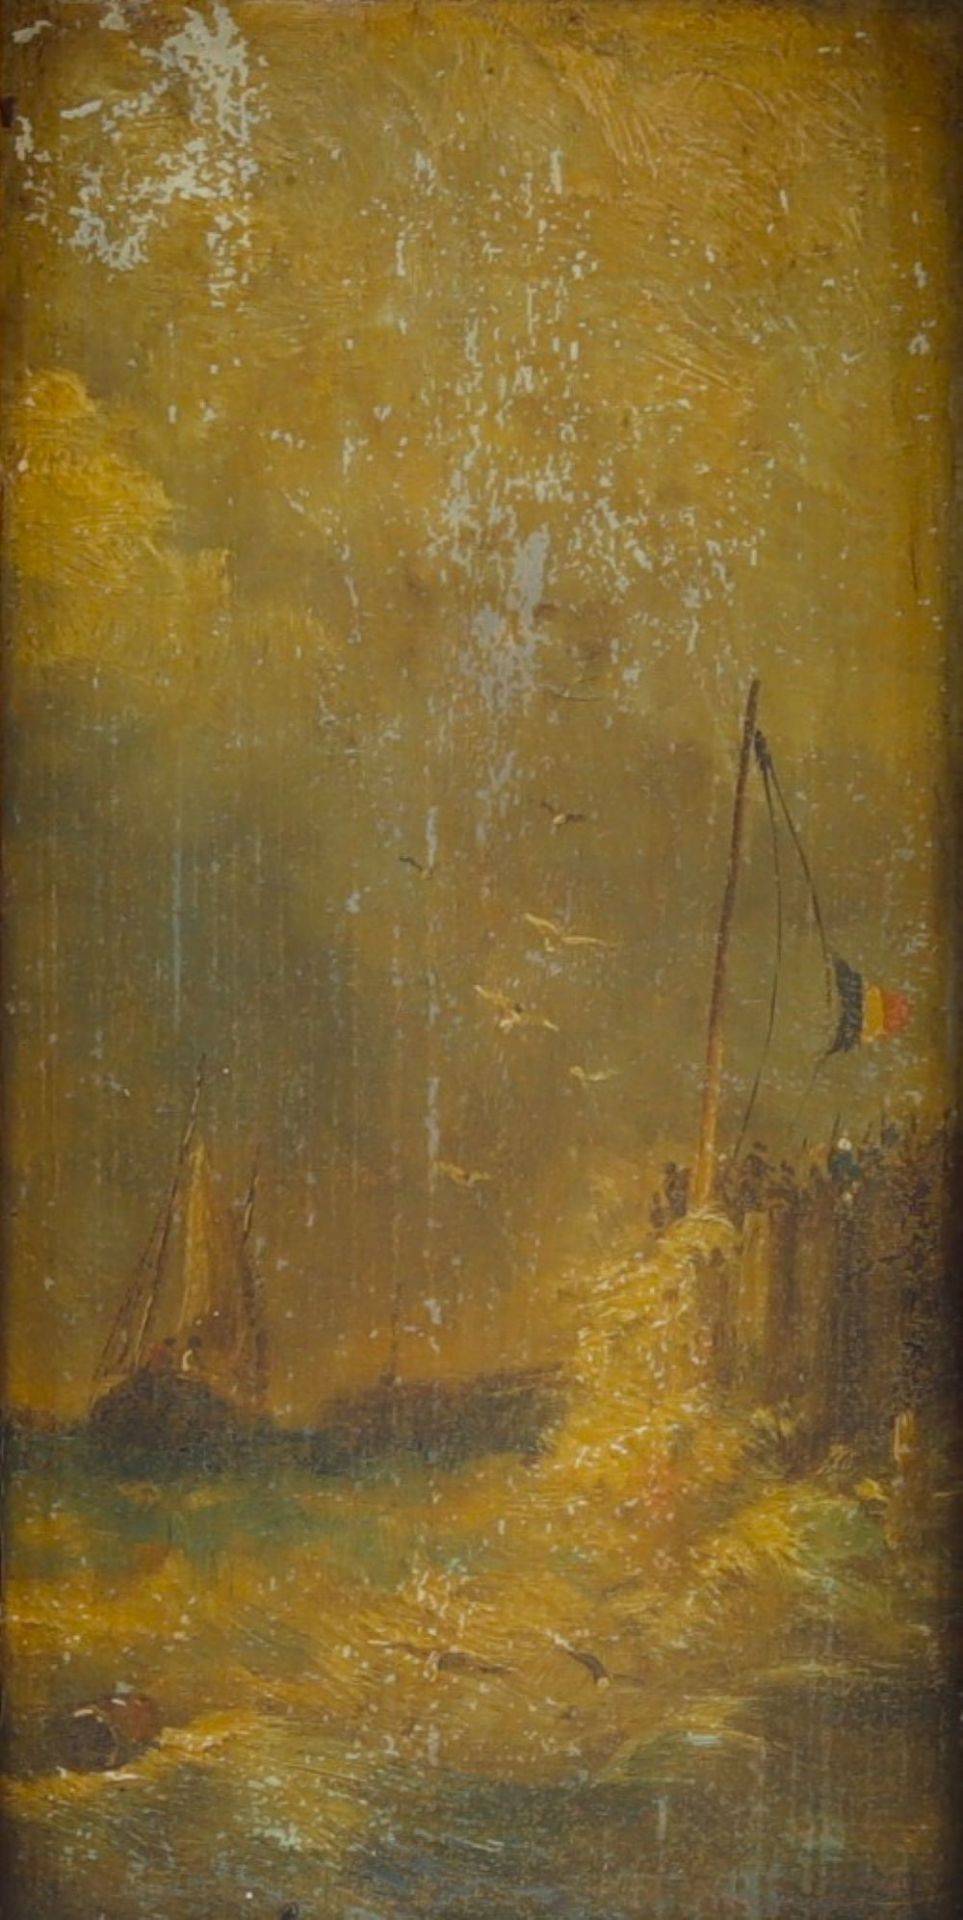 Theodore GUDIN (1802-1880) attr. to "Marine" Oil on panel, 19th century.